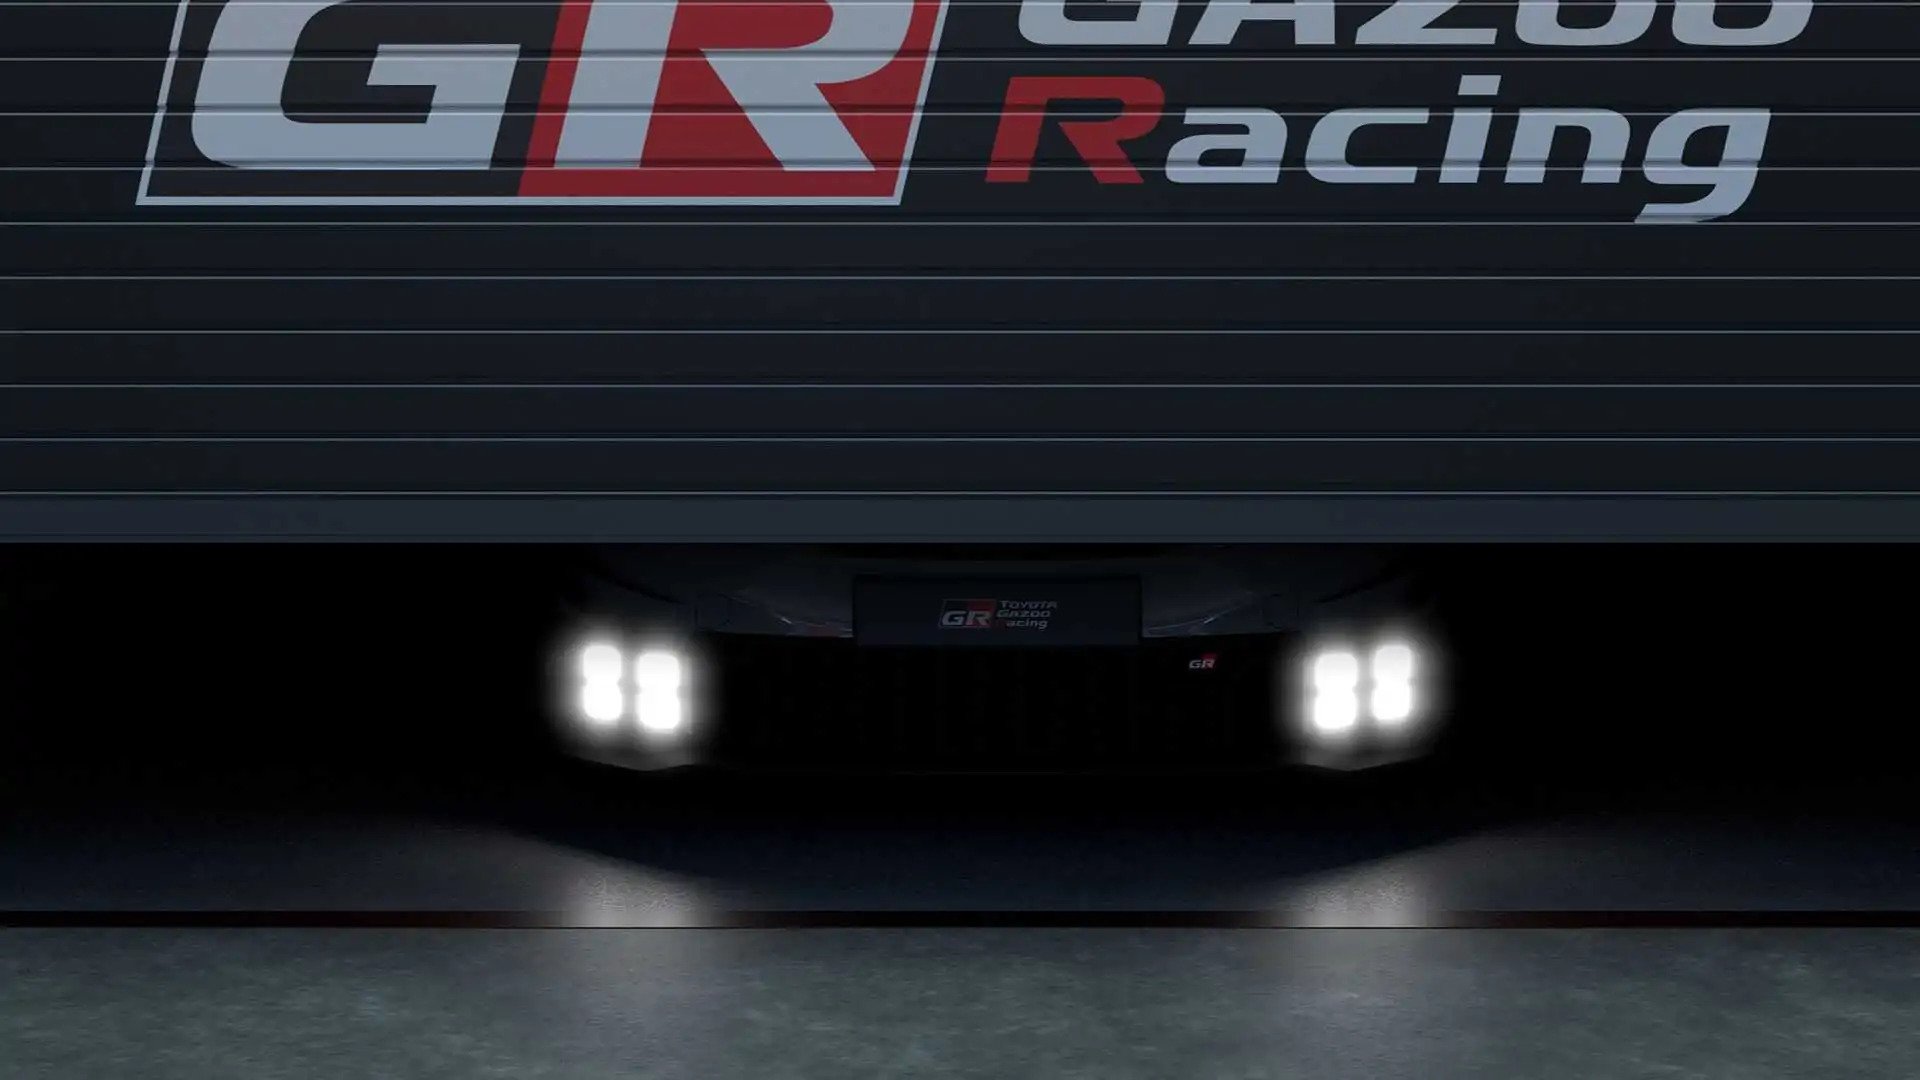 Toyota Gazoo Racing verrät mysteriöses Konzept vor der Le Mans Enthüllung